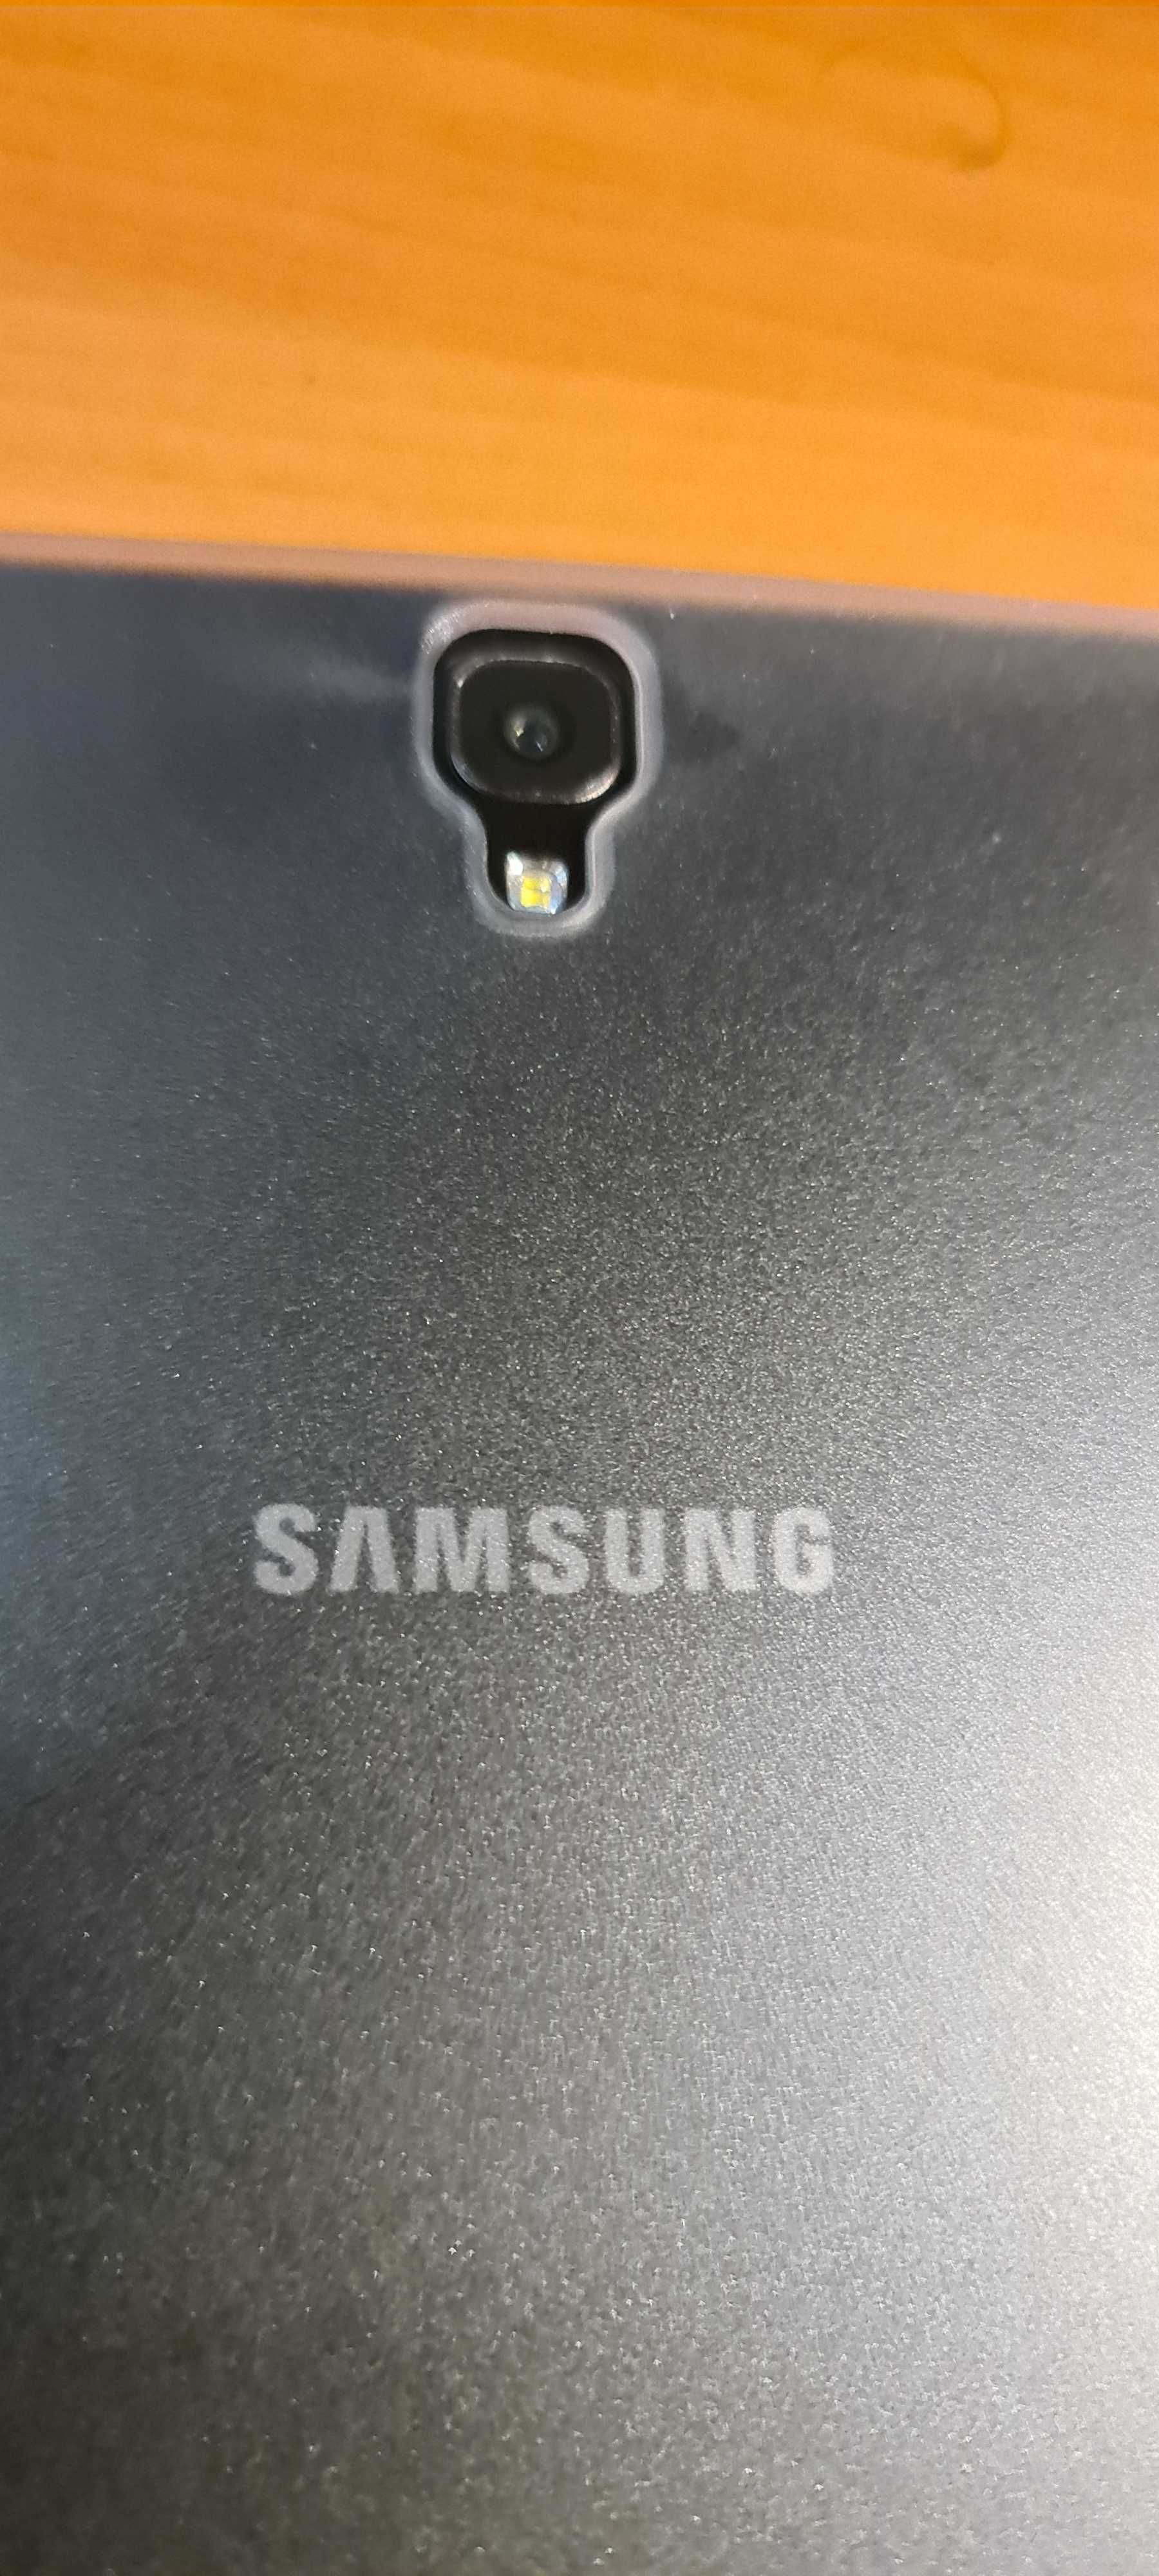 Samsung Galaxy Tab S3 32/4gb + 16gb sd card подарък